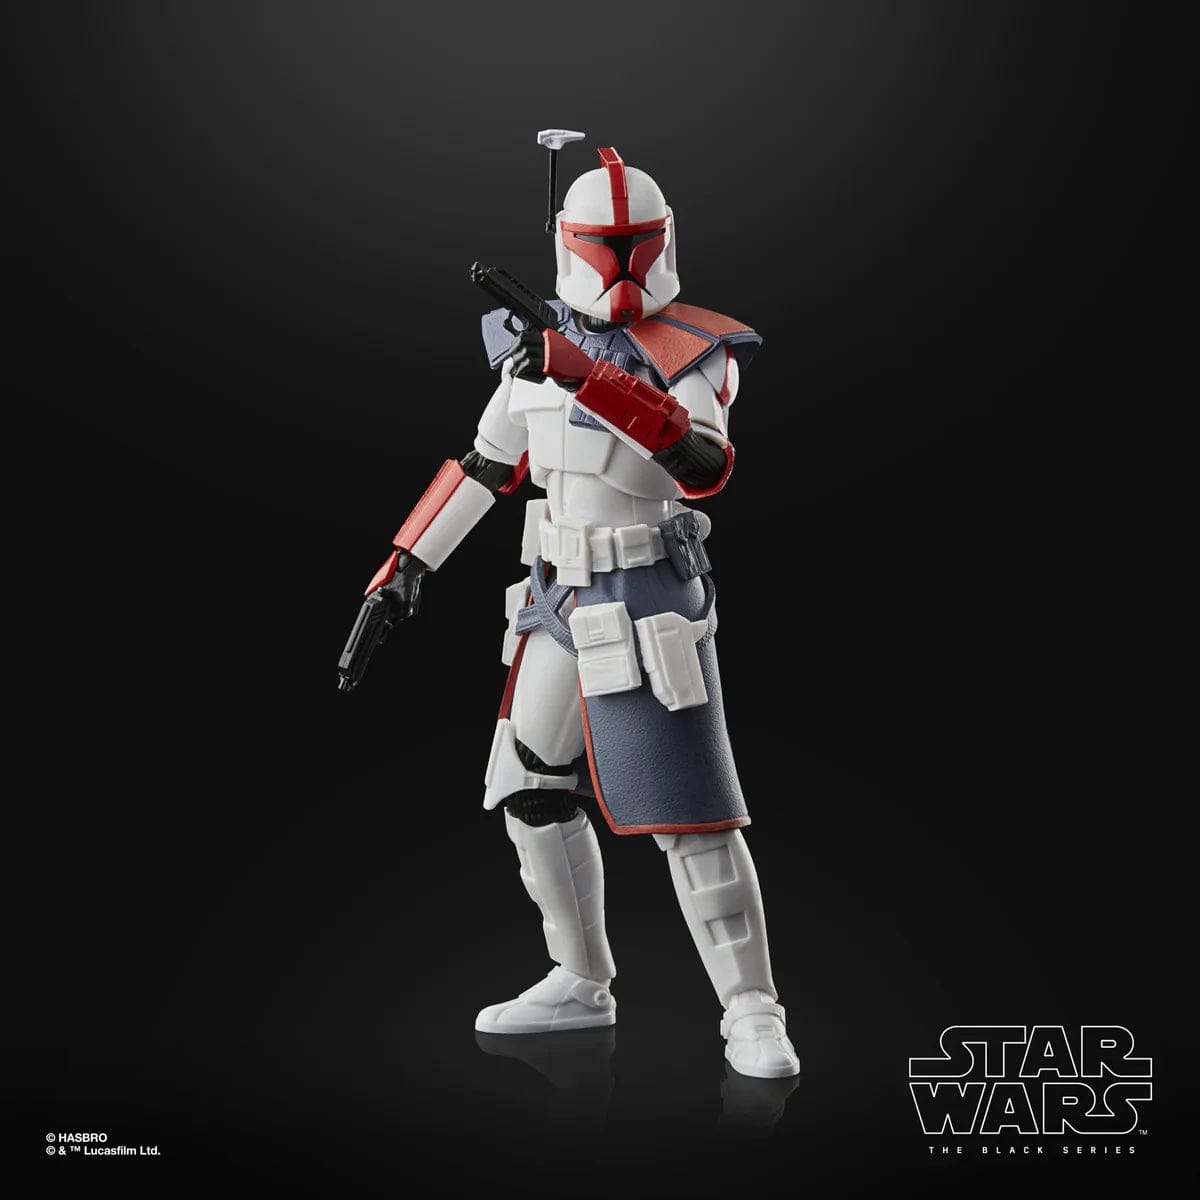 Hasbro Star Wars The Black Series Star Wars: Clone Wars ARC Trooper Action Figure